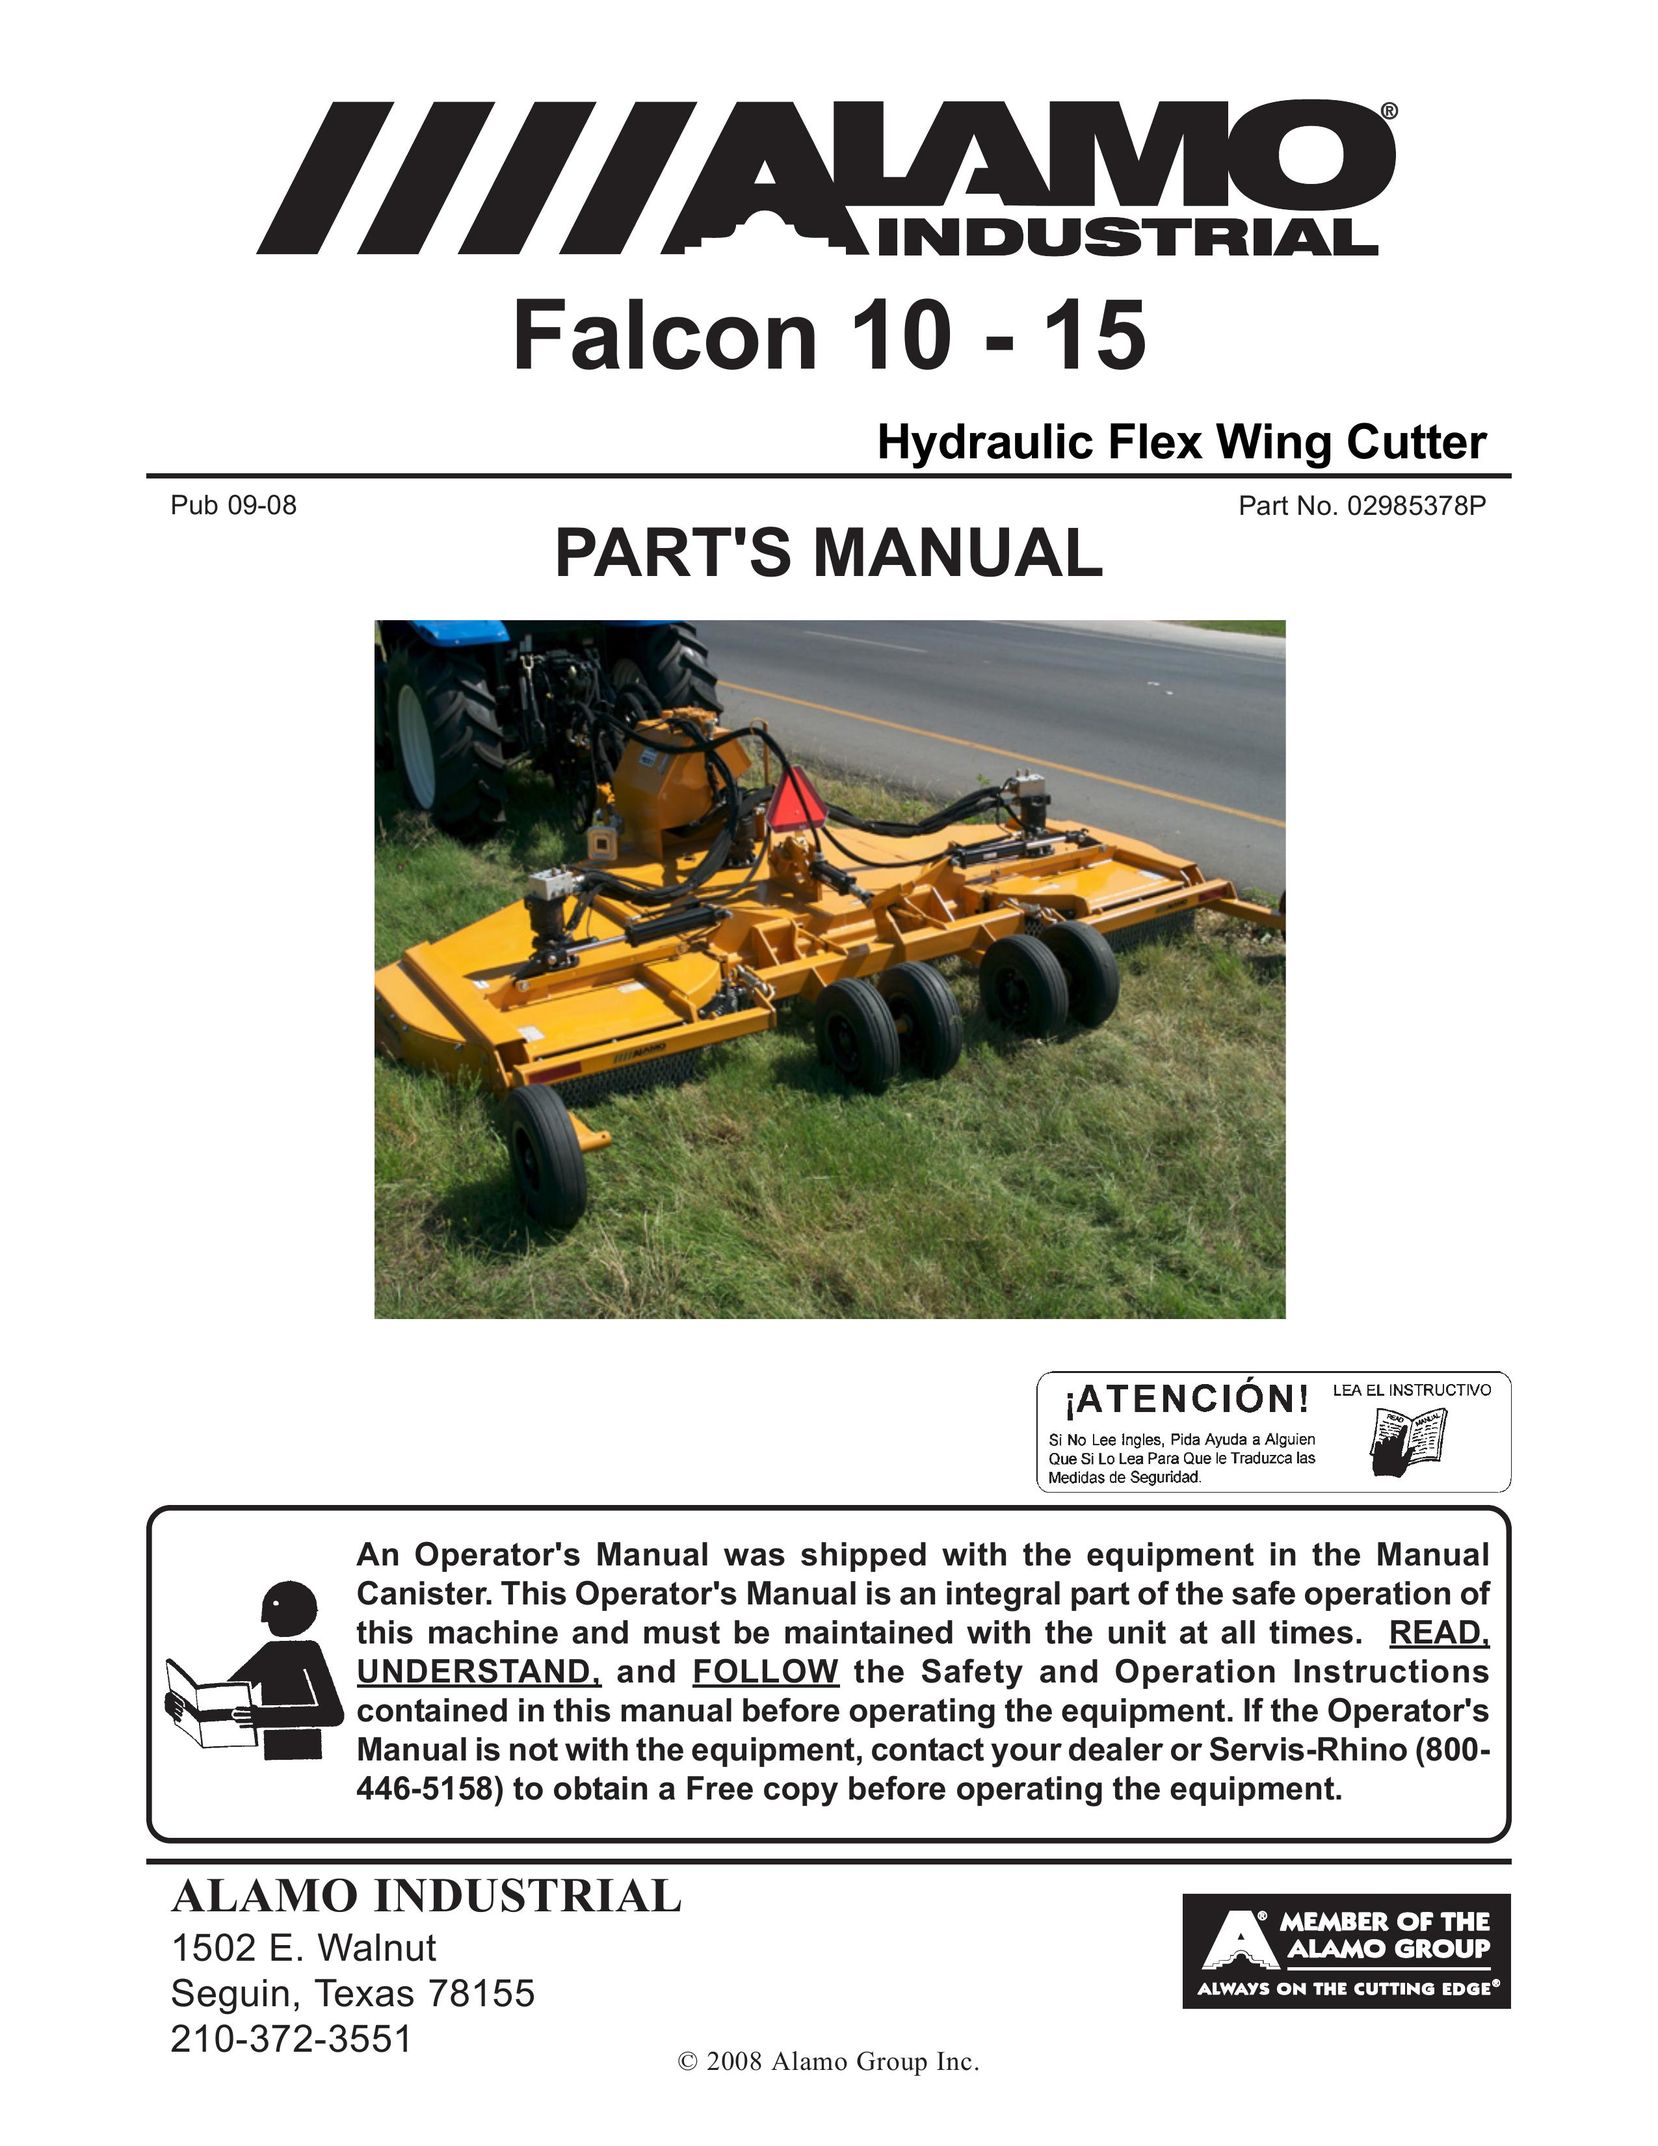 Alamo Falcon 10 - 15 Welder User Manual